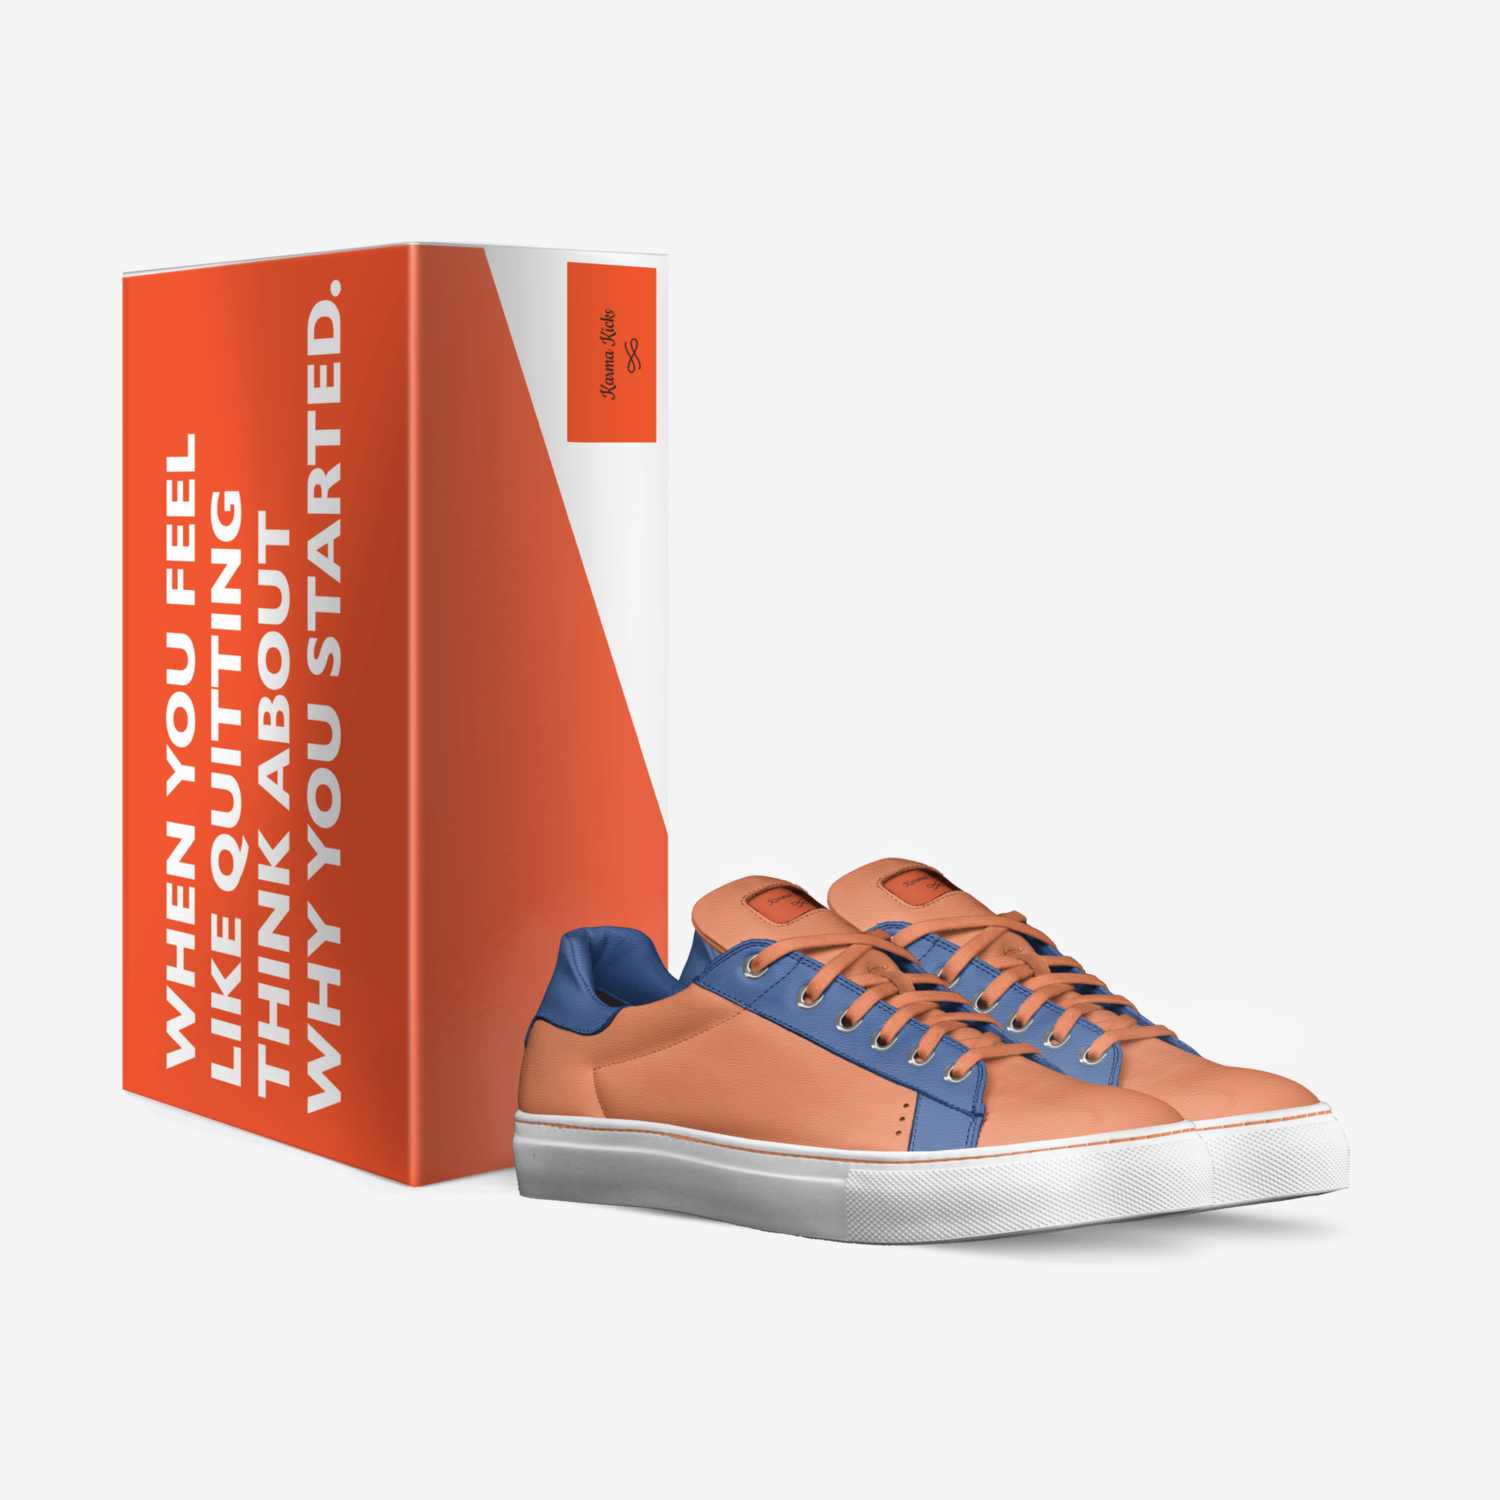 Karma Kicks custom made in Italy shoes by Jamual Stovall | Box view